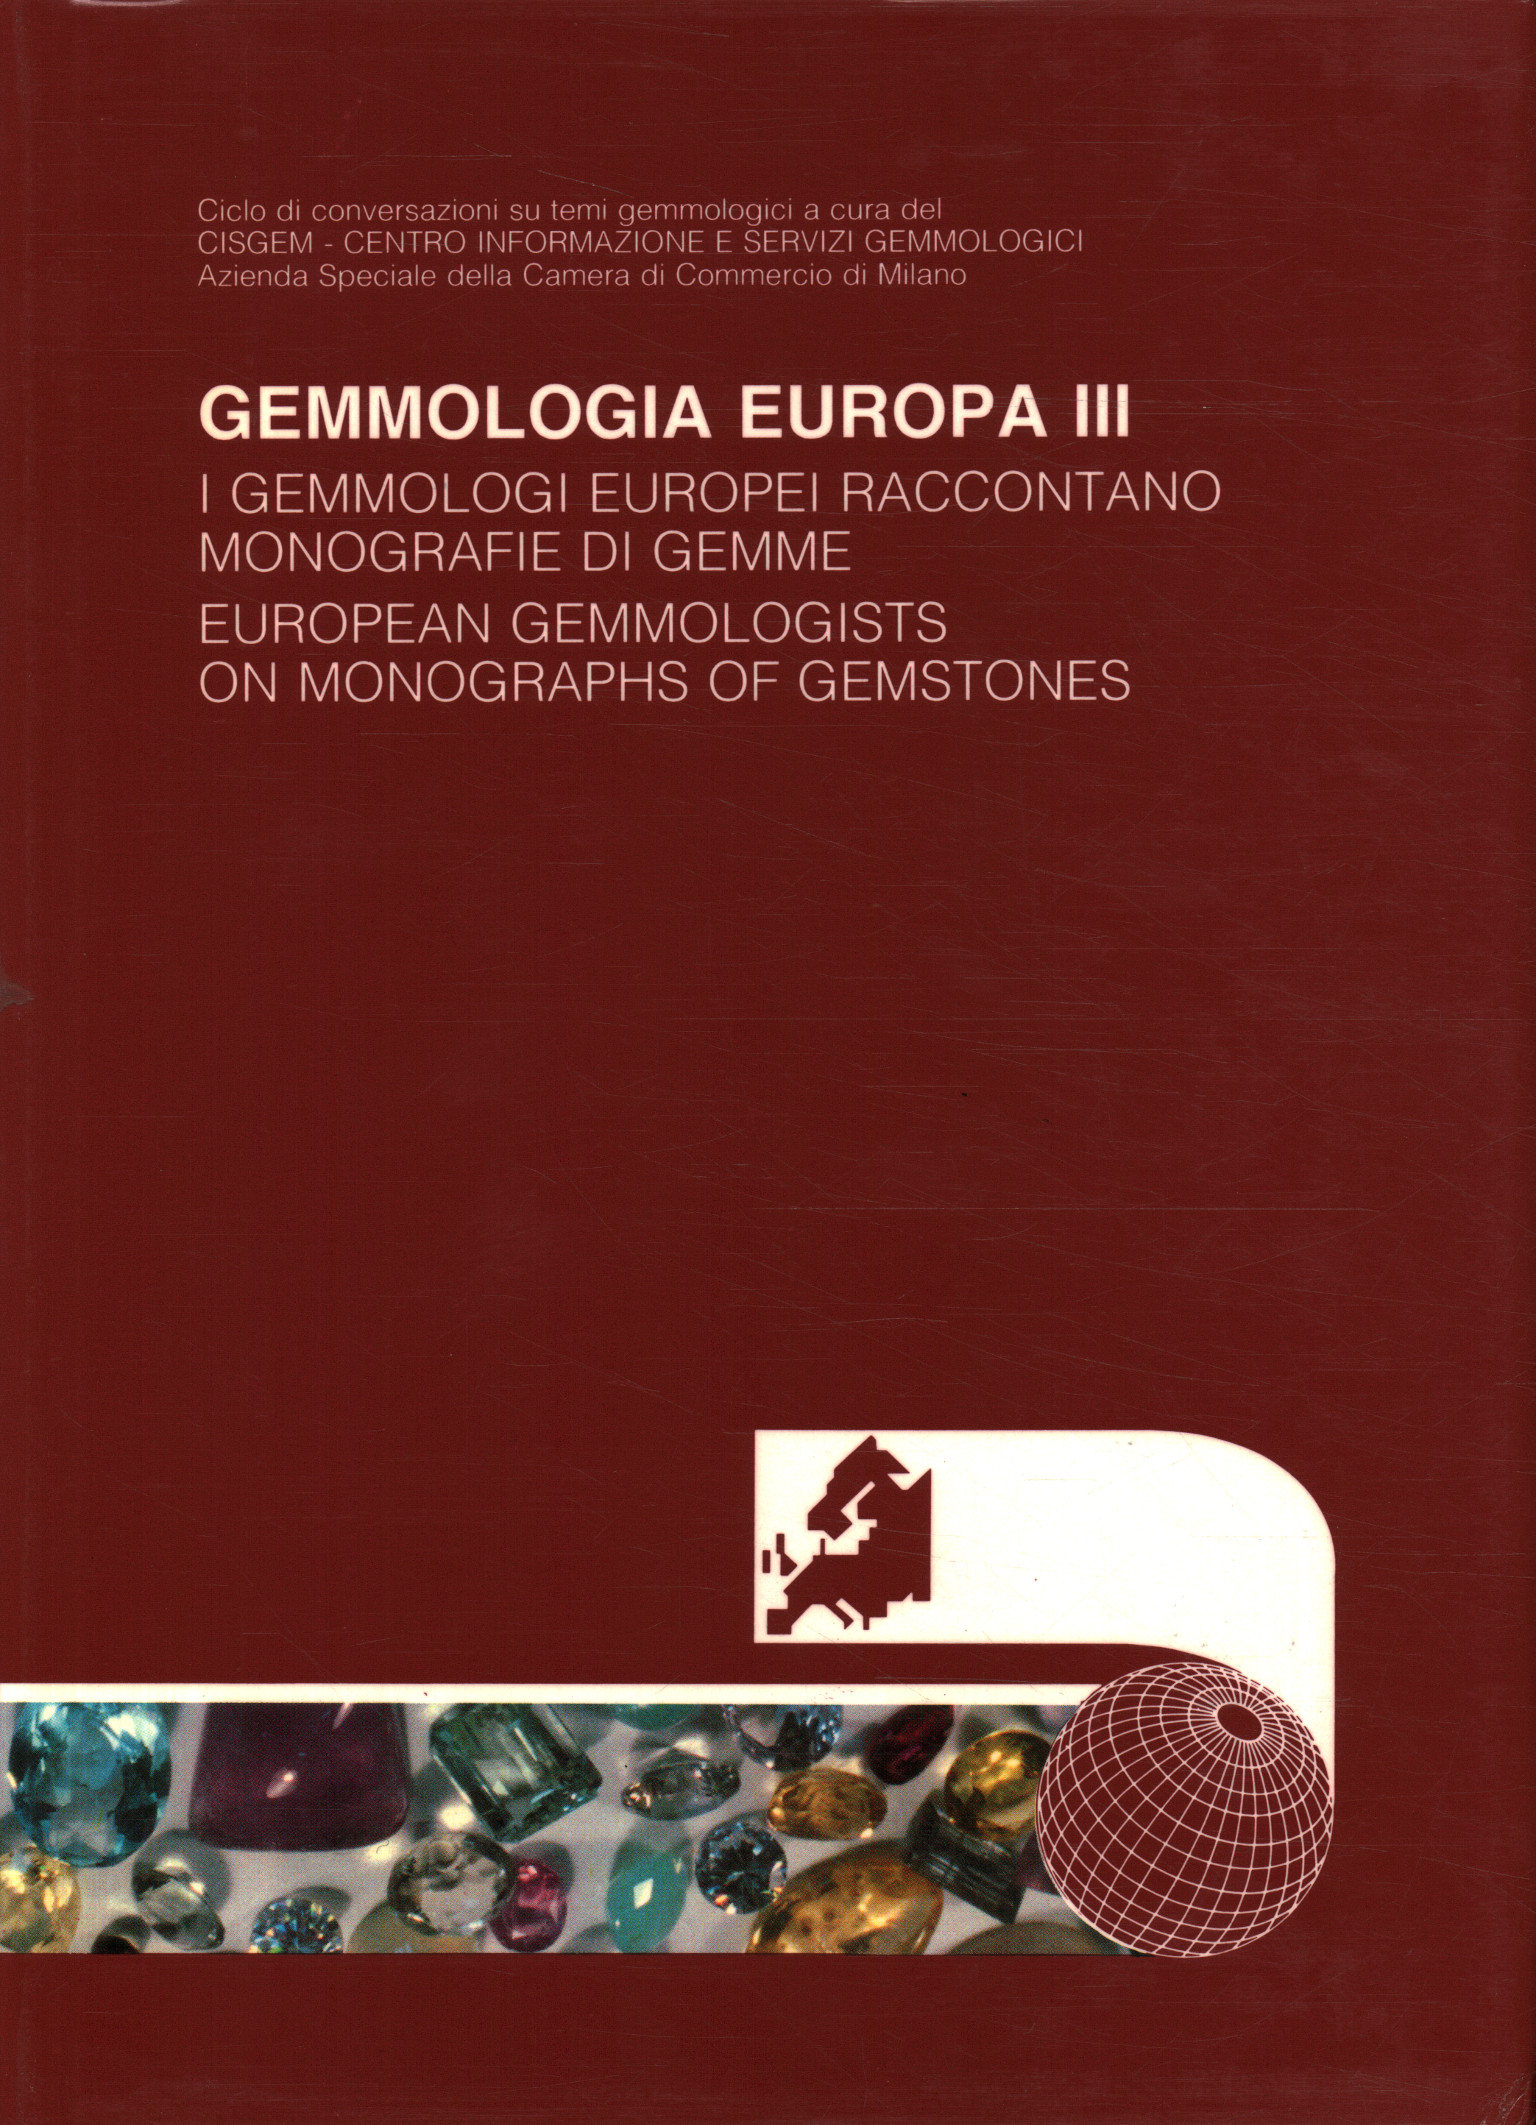 Gemmologie Europe III